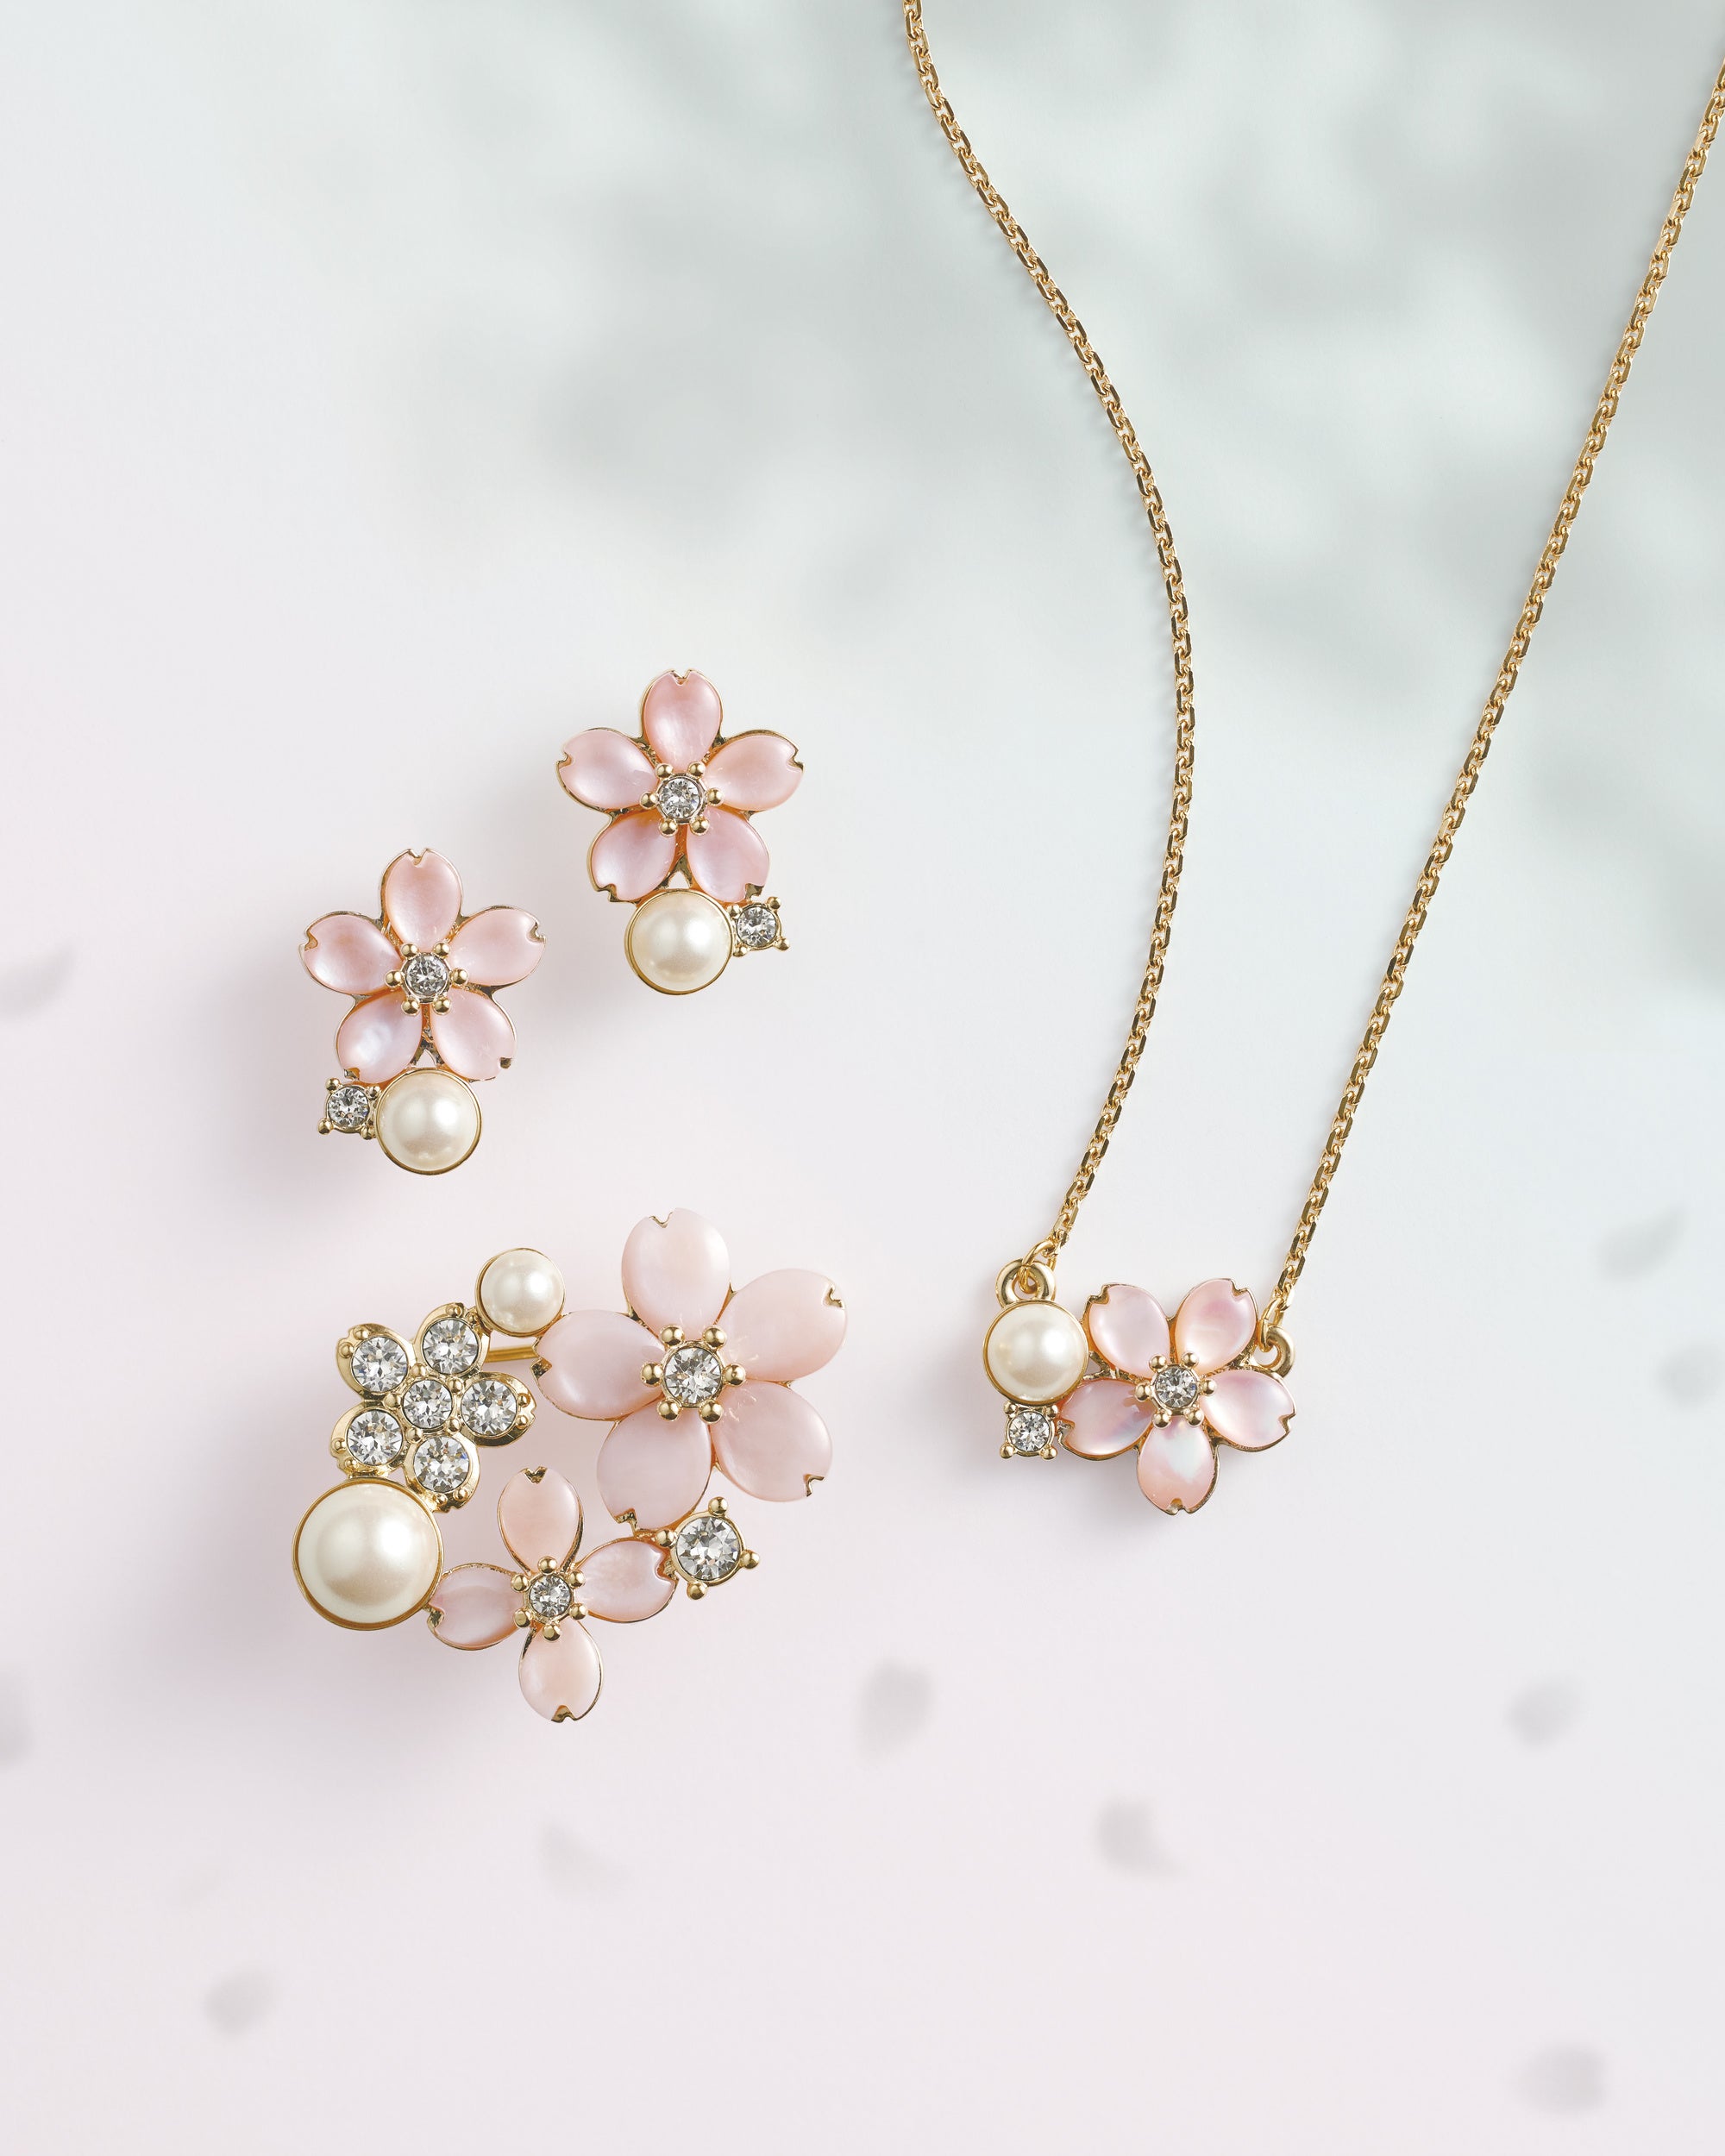 【ANTEPRIMA】桜やフィオーリ(花)をモチーフとした新作コレクションが登場